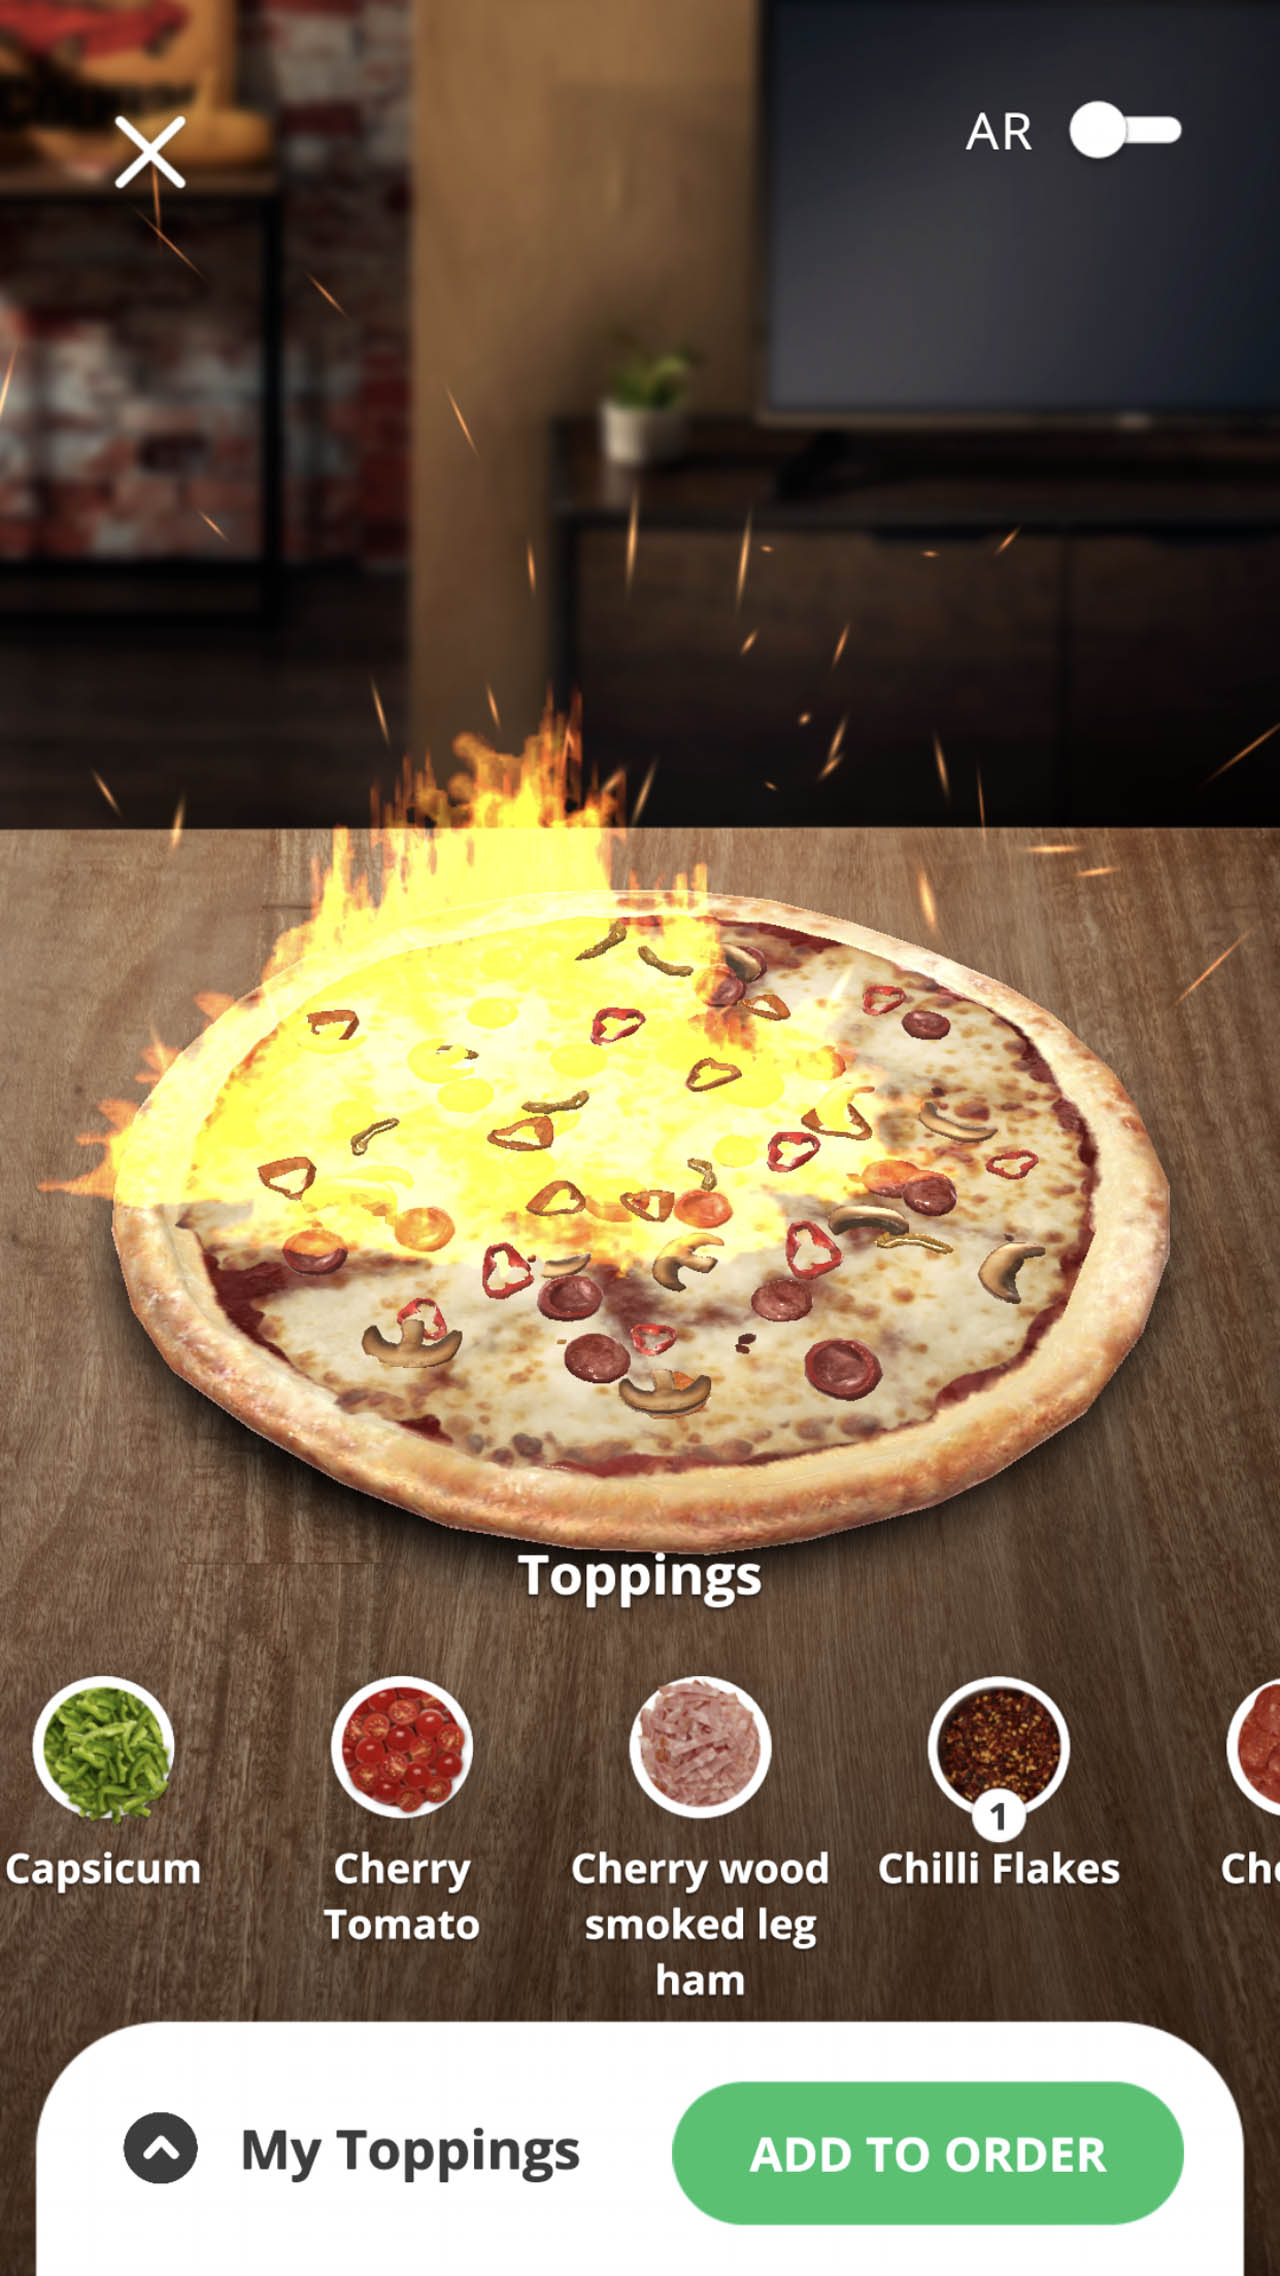 Dominoes AR Chef App